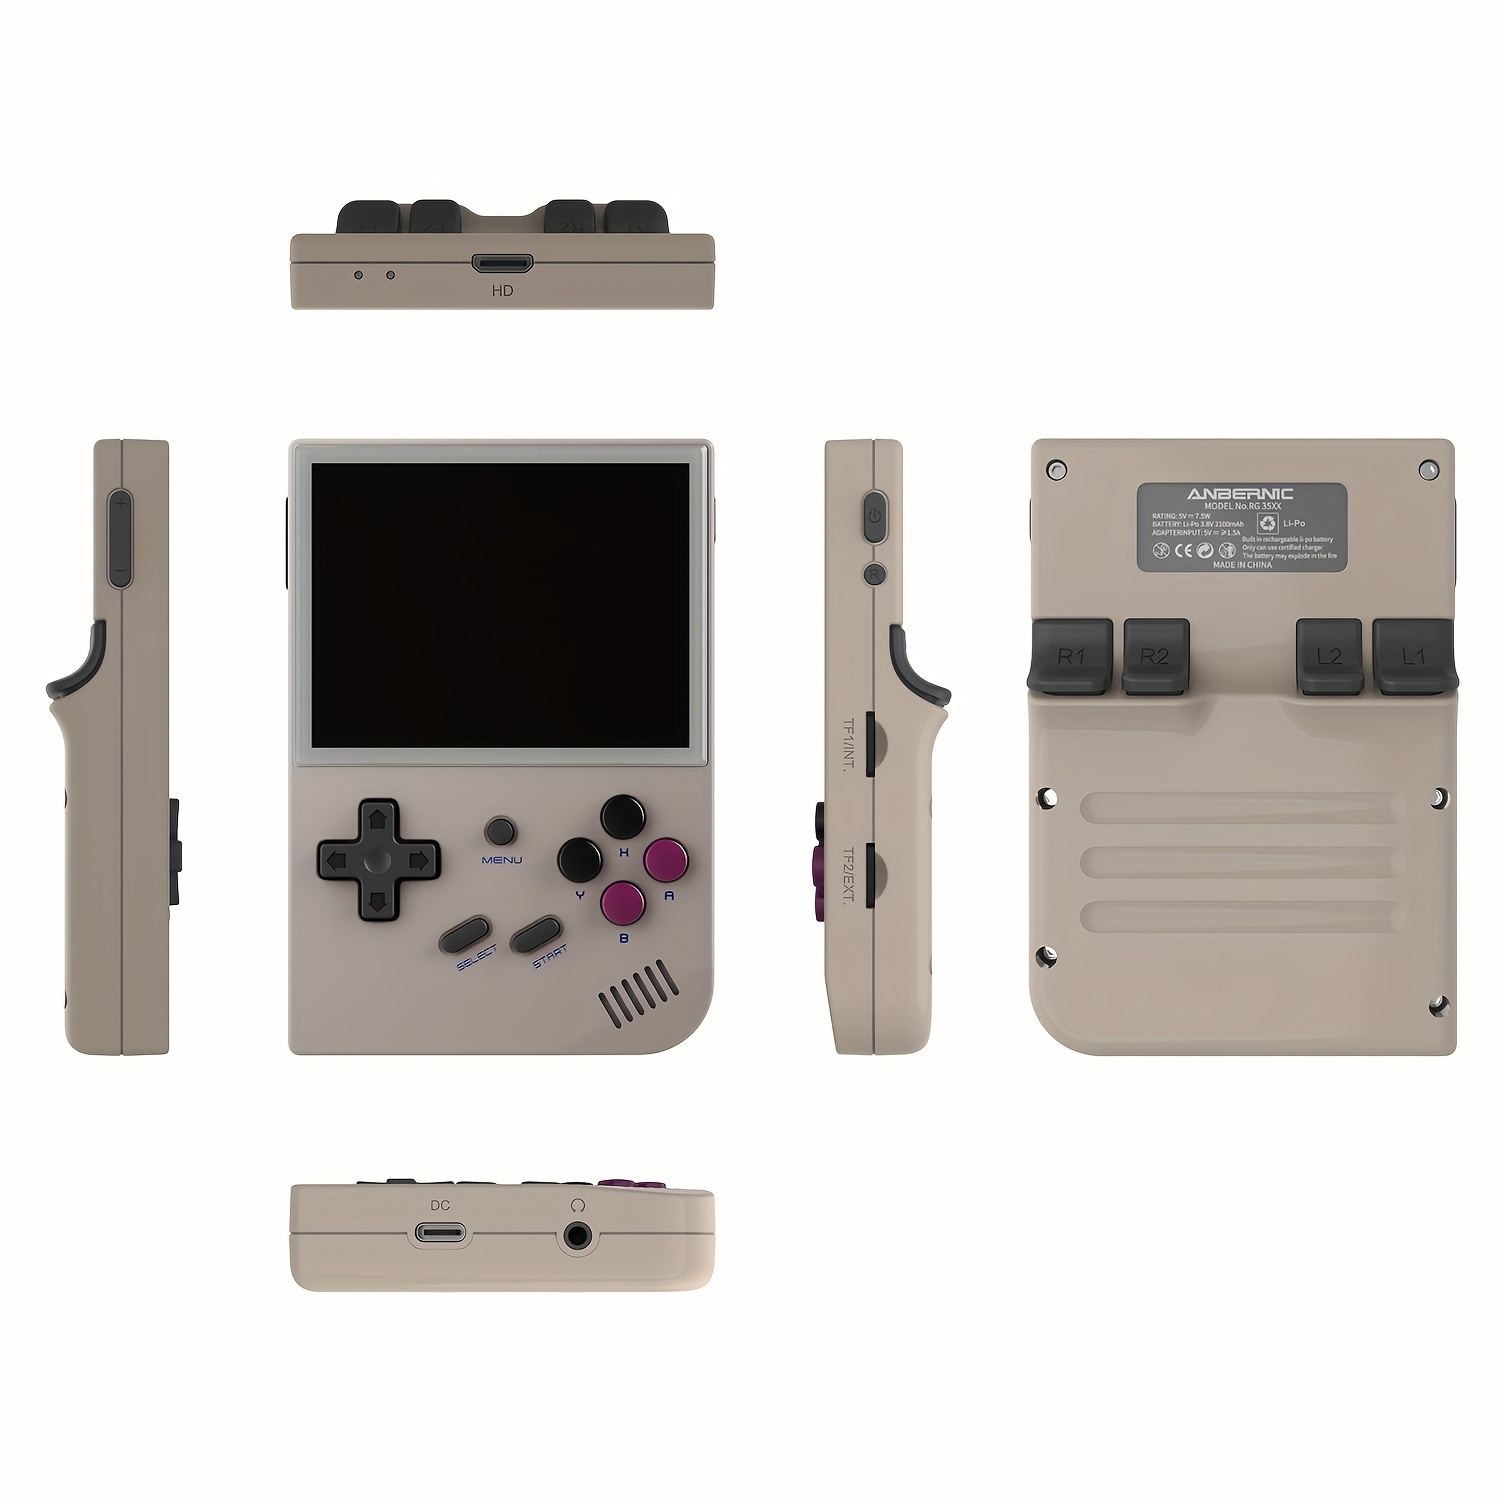 Game Boy Interface